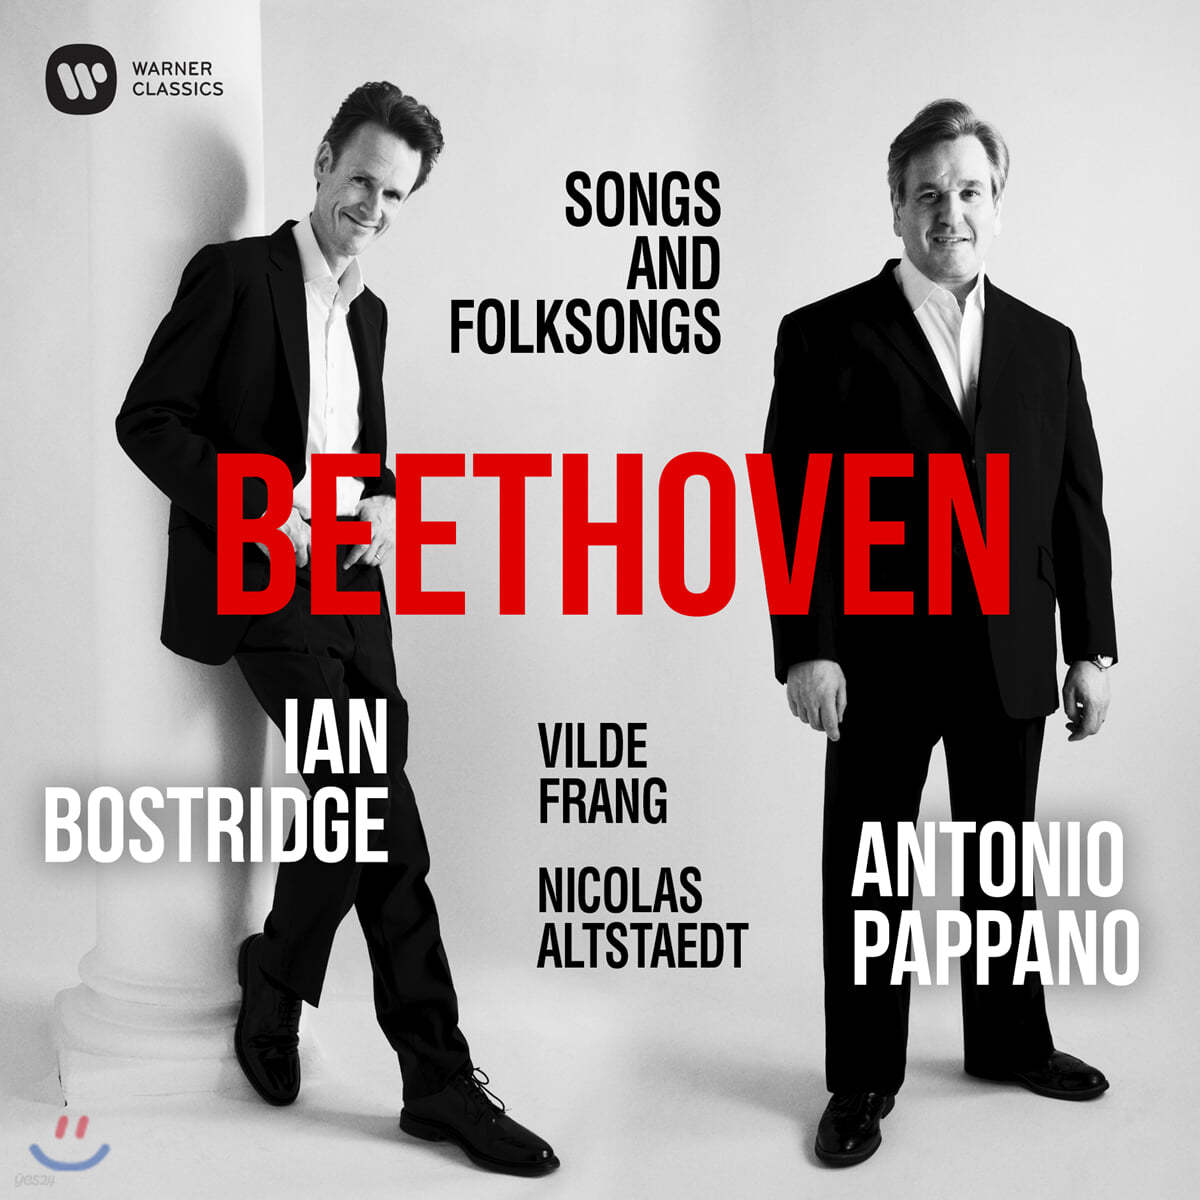 Ian Bostridge / Antonio Pappano 베토벤: 가곡과 민요 편곡집 - 이안 보스트리지 (Beethoven: Songs and Folksongs)